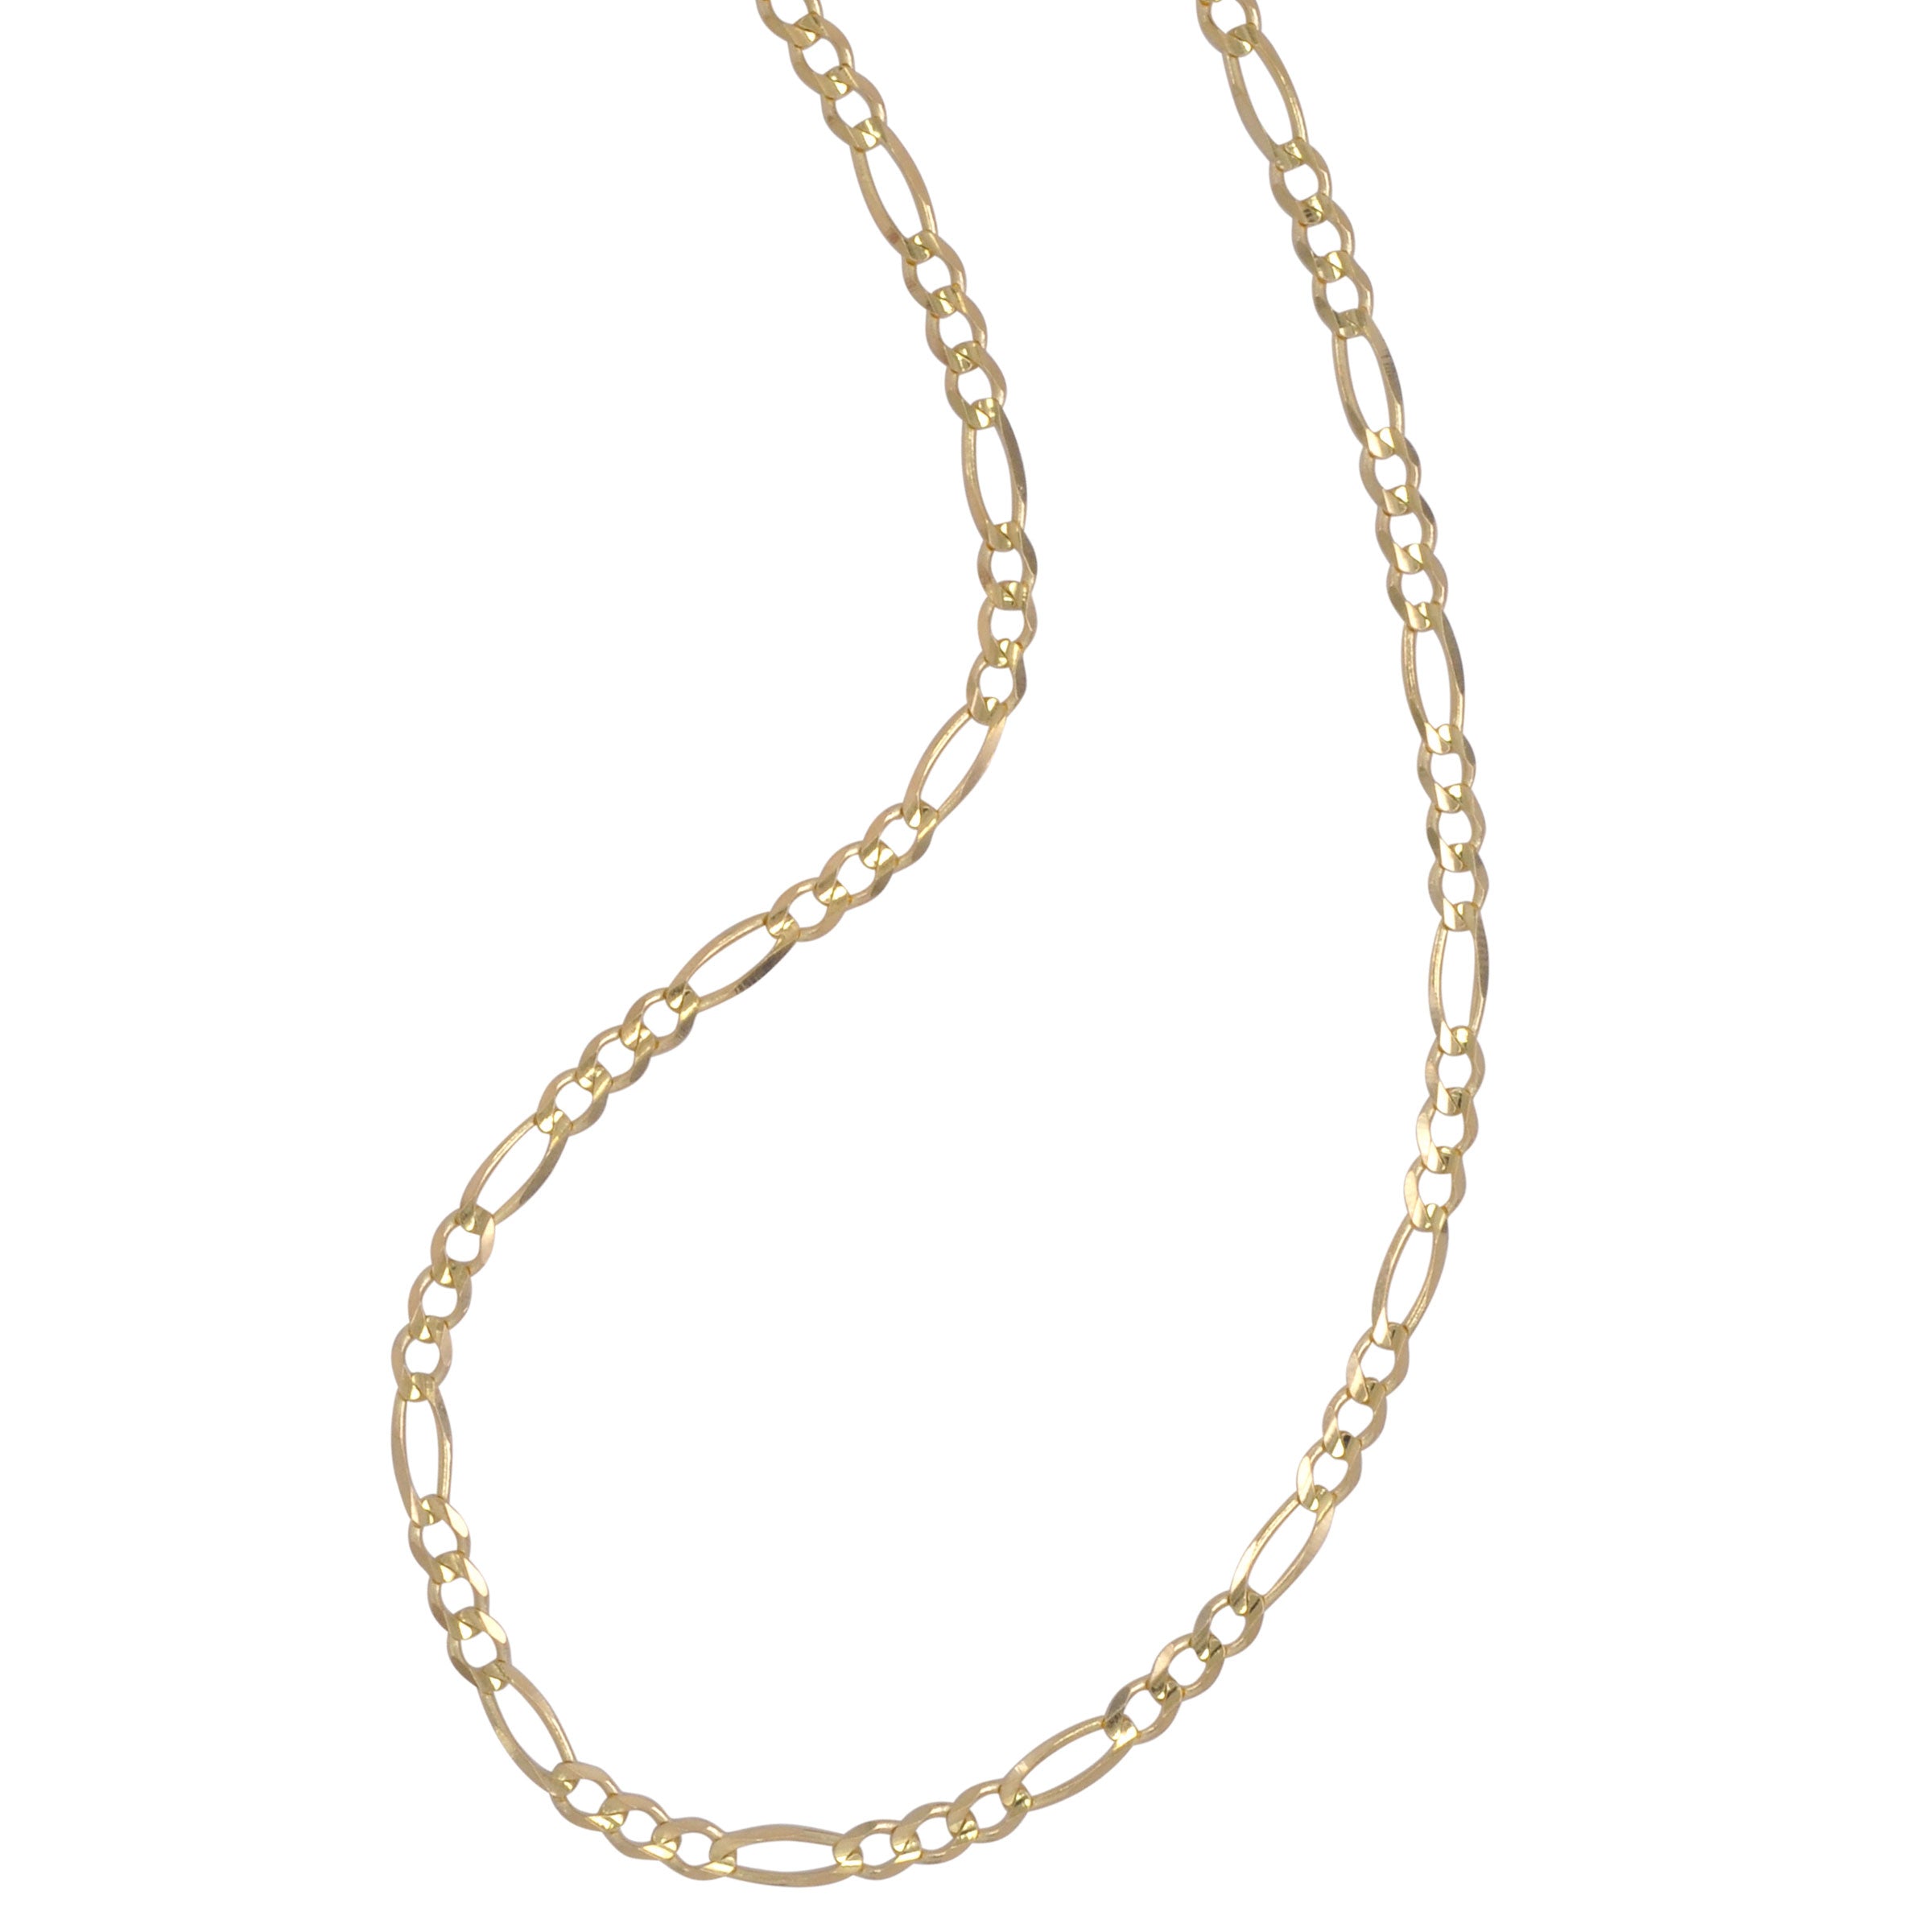 Custom Size Figaro Chain Necklace - Antique Bronze Chain